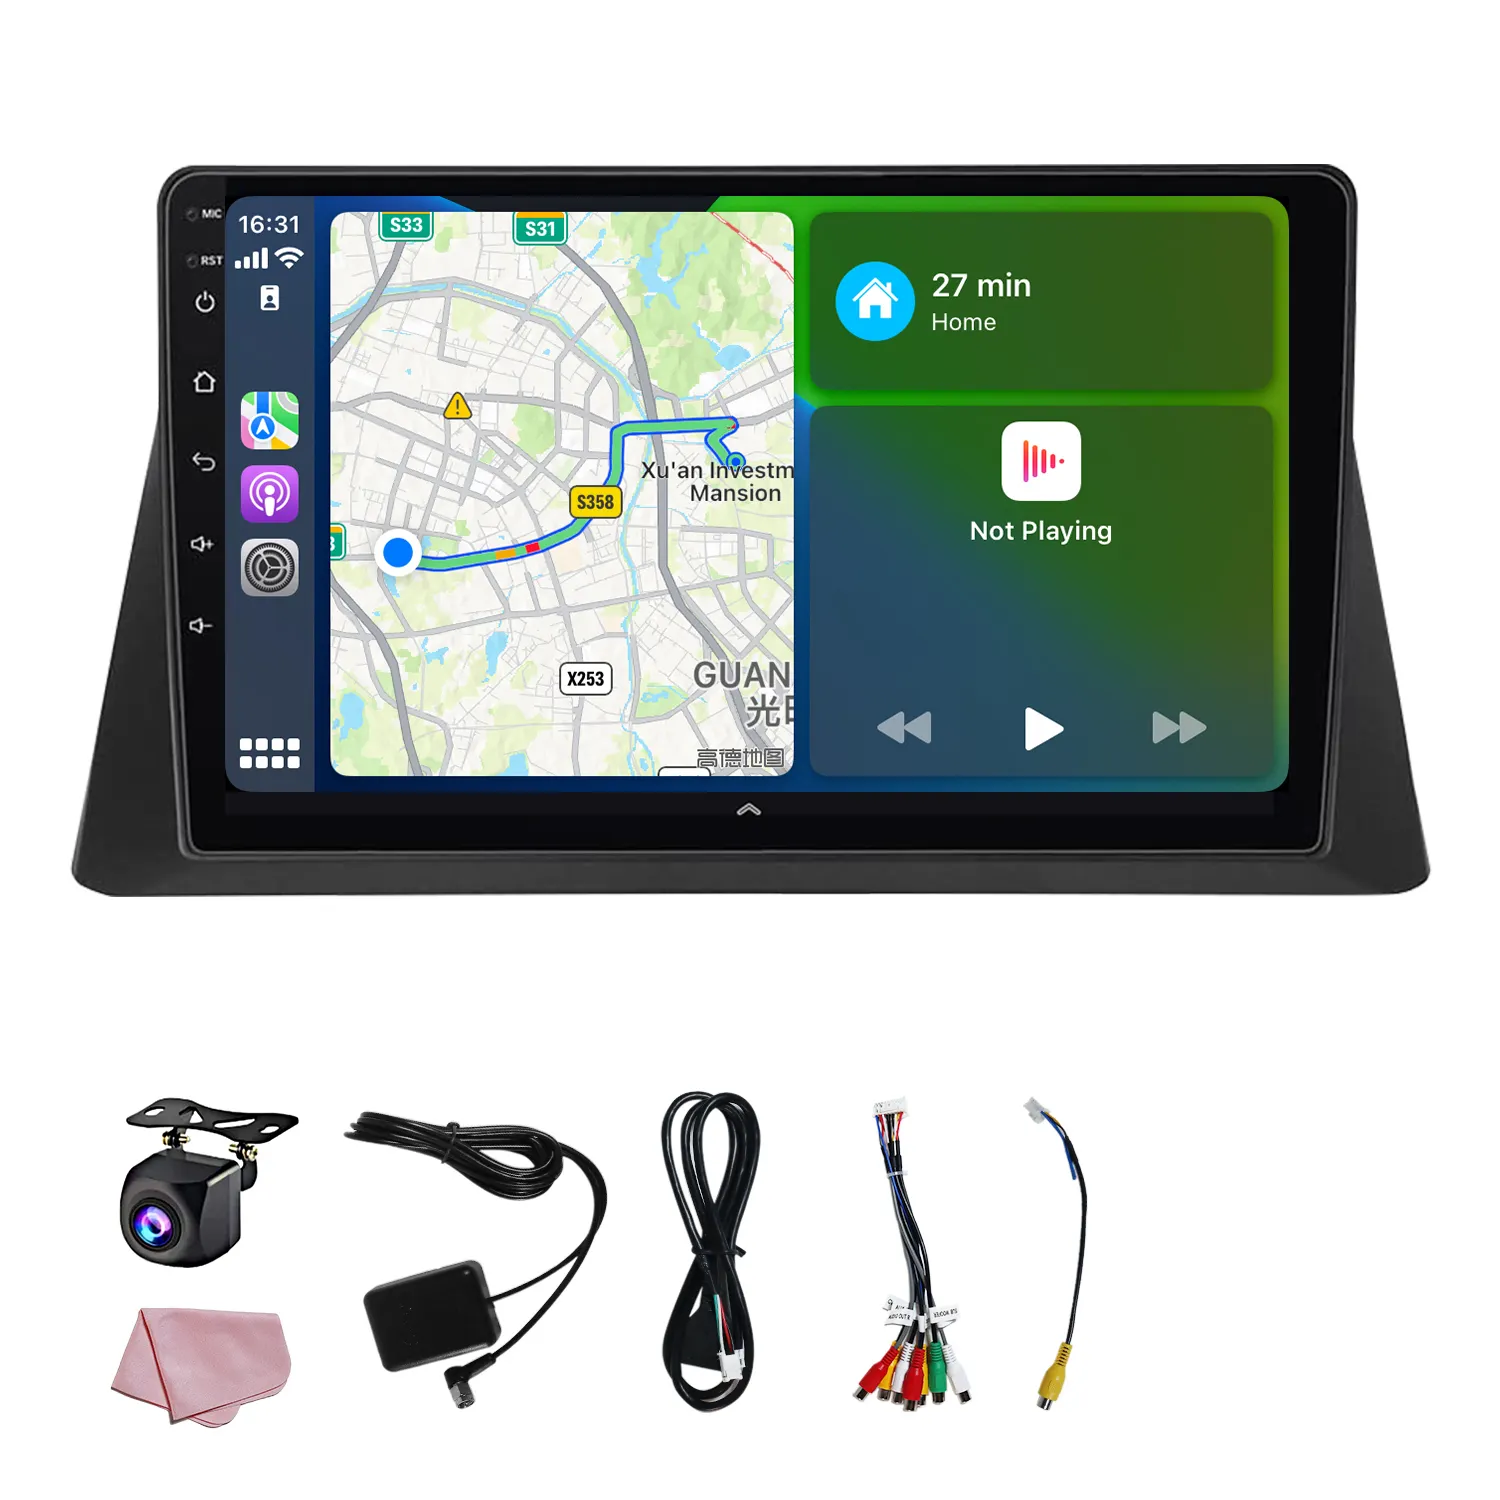 Evrensel Android dokunmatik ekran araba Stereo merkezi multimedya GPS navigasyon araç Dvd oynatıcı oynatıcı autoestereo android ekran araba